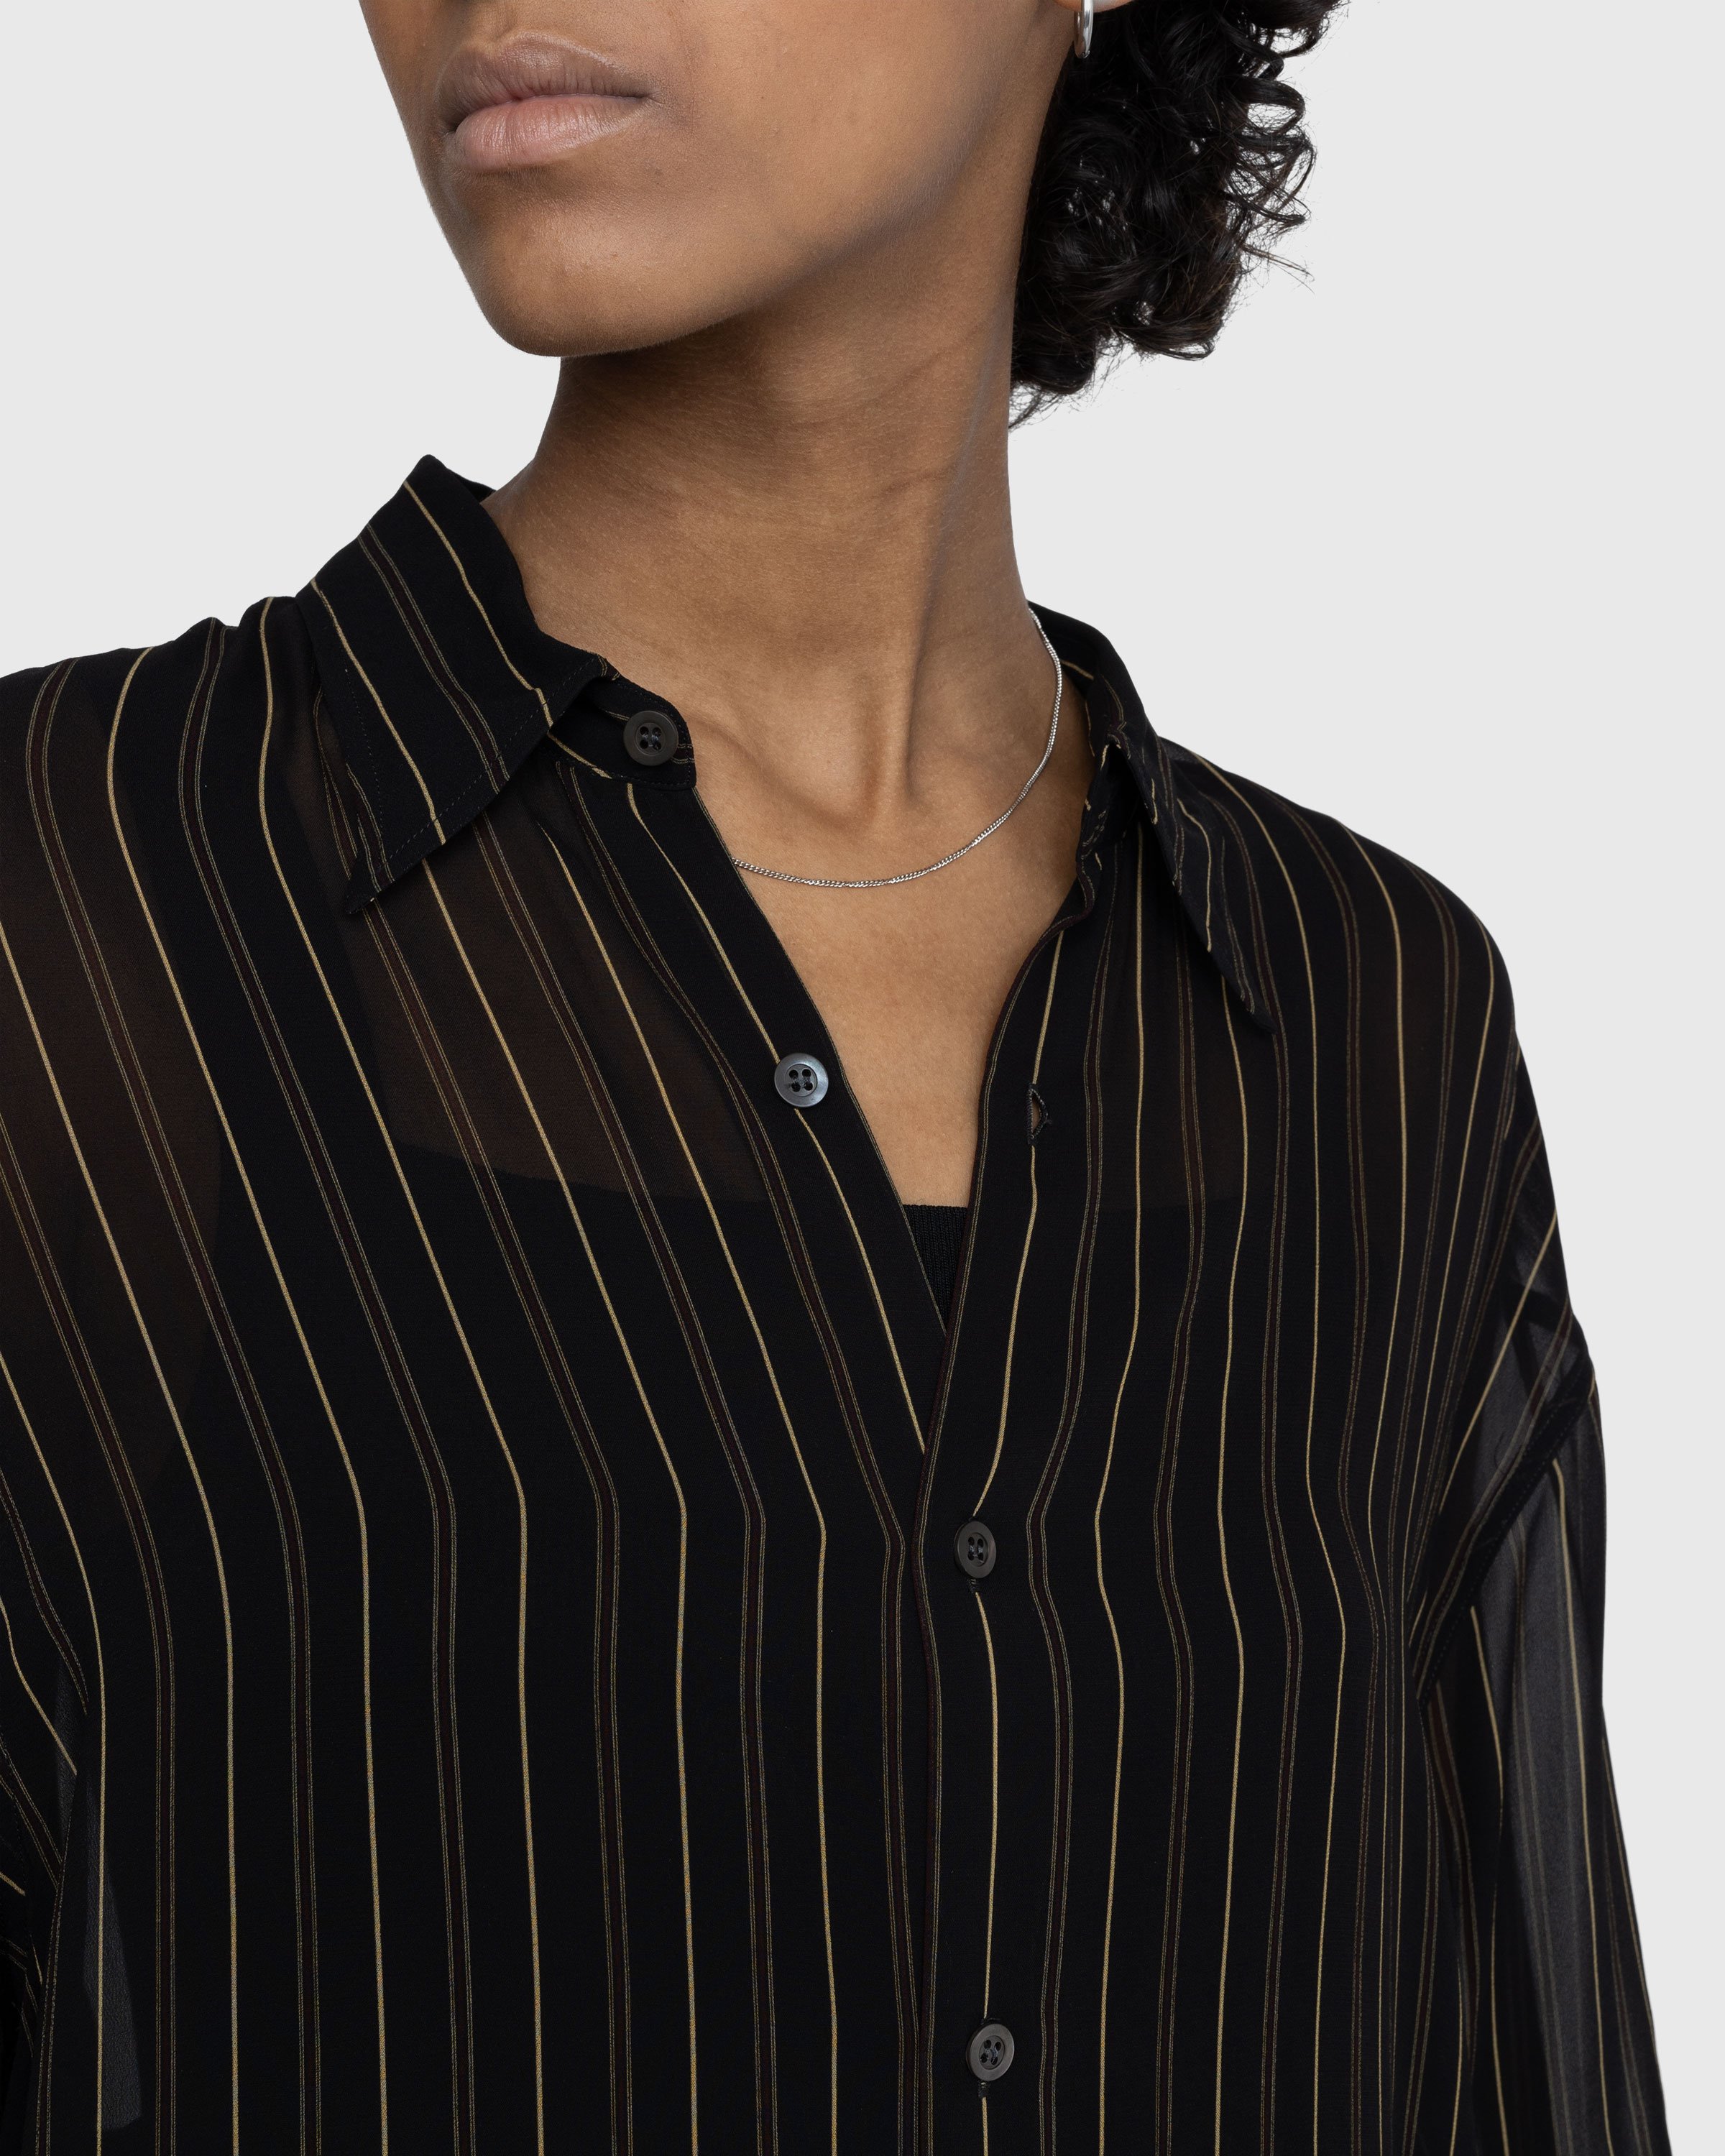 Dries van Noten - Cassidye Shirt Black - Clothing - Black - Image 5